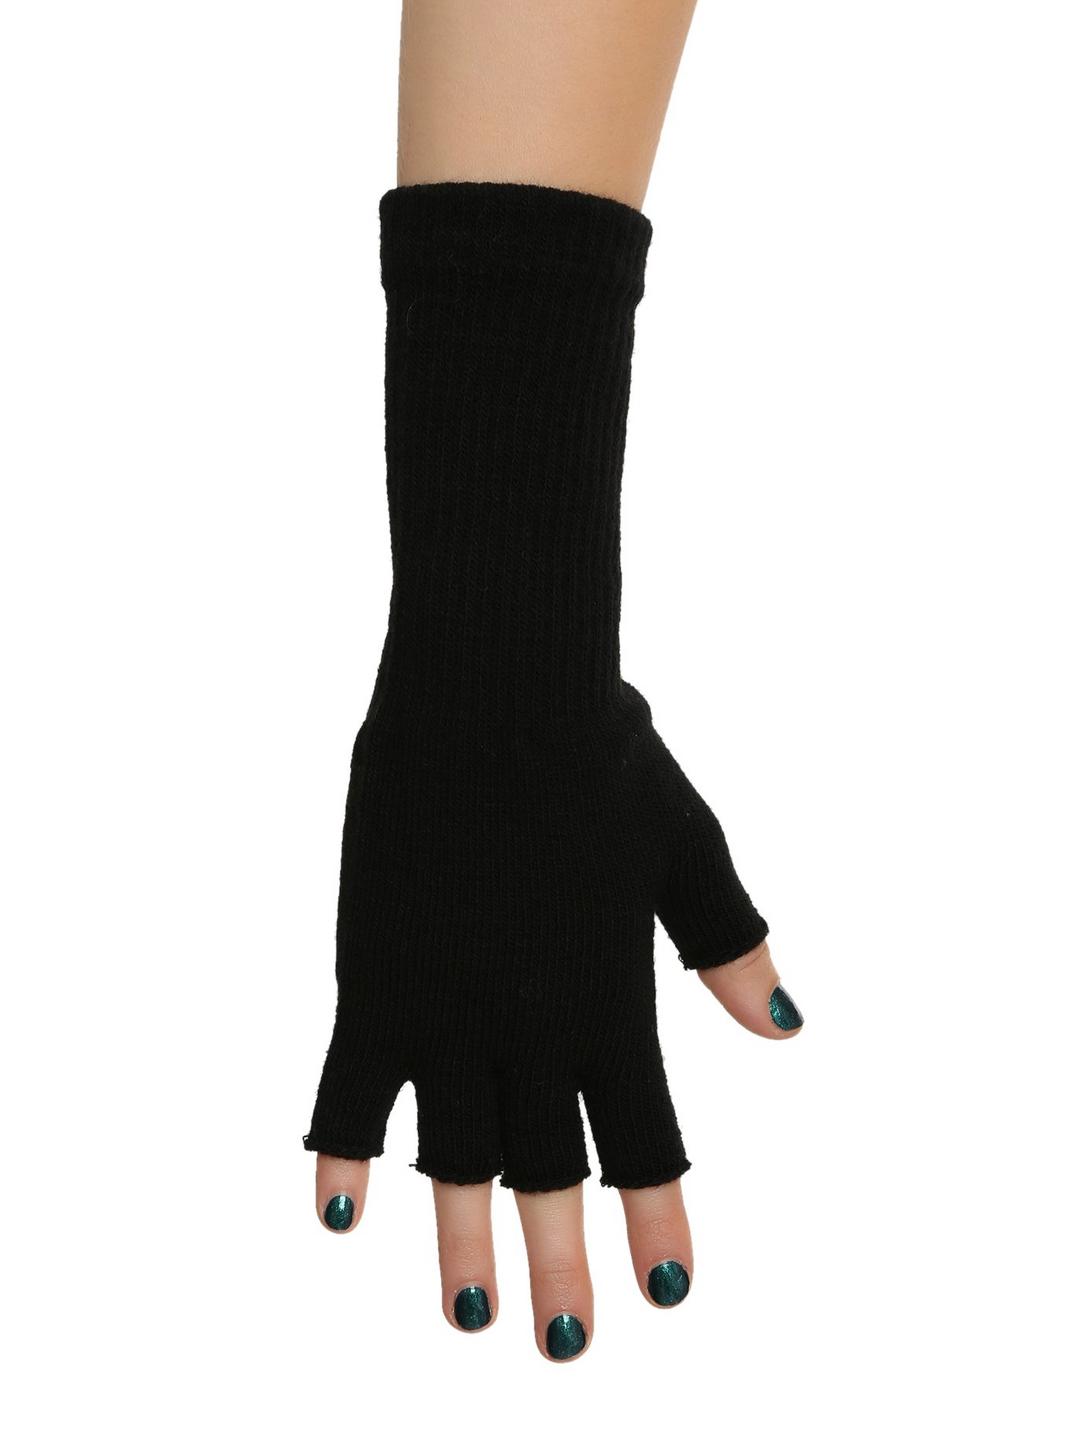 Black Extended Cuff Fingerless Gloves, , hi-res